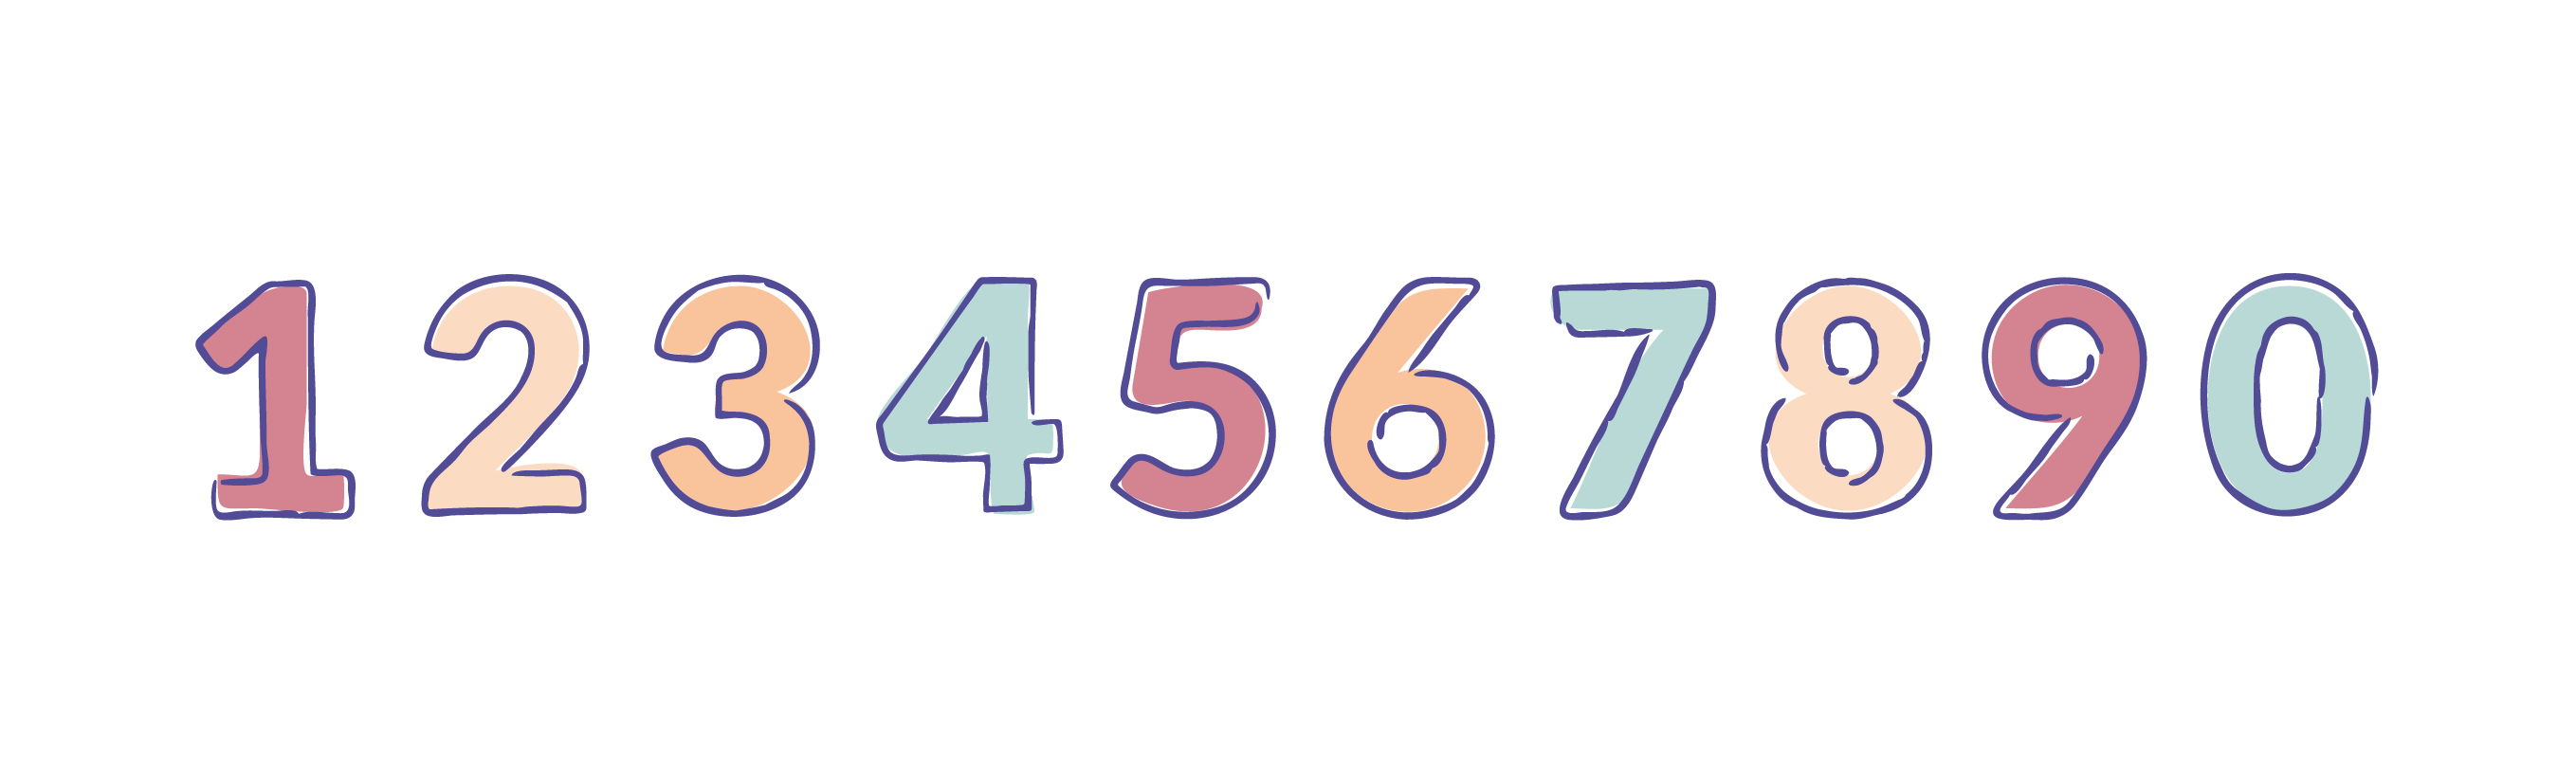 Alpe_numbers-01